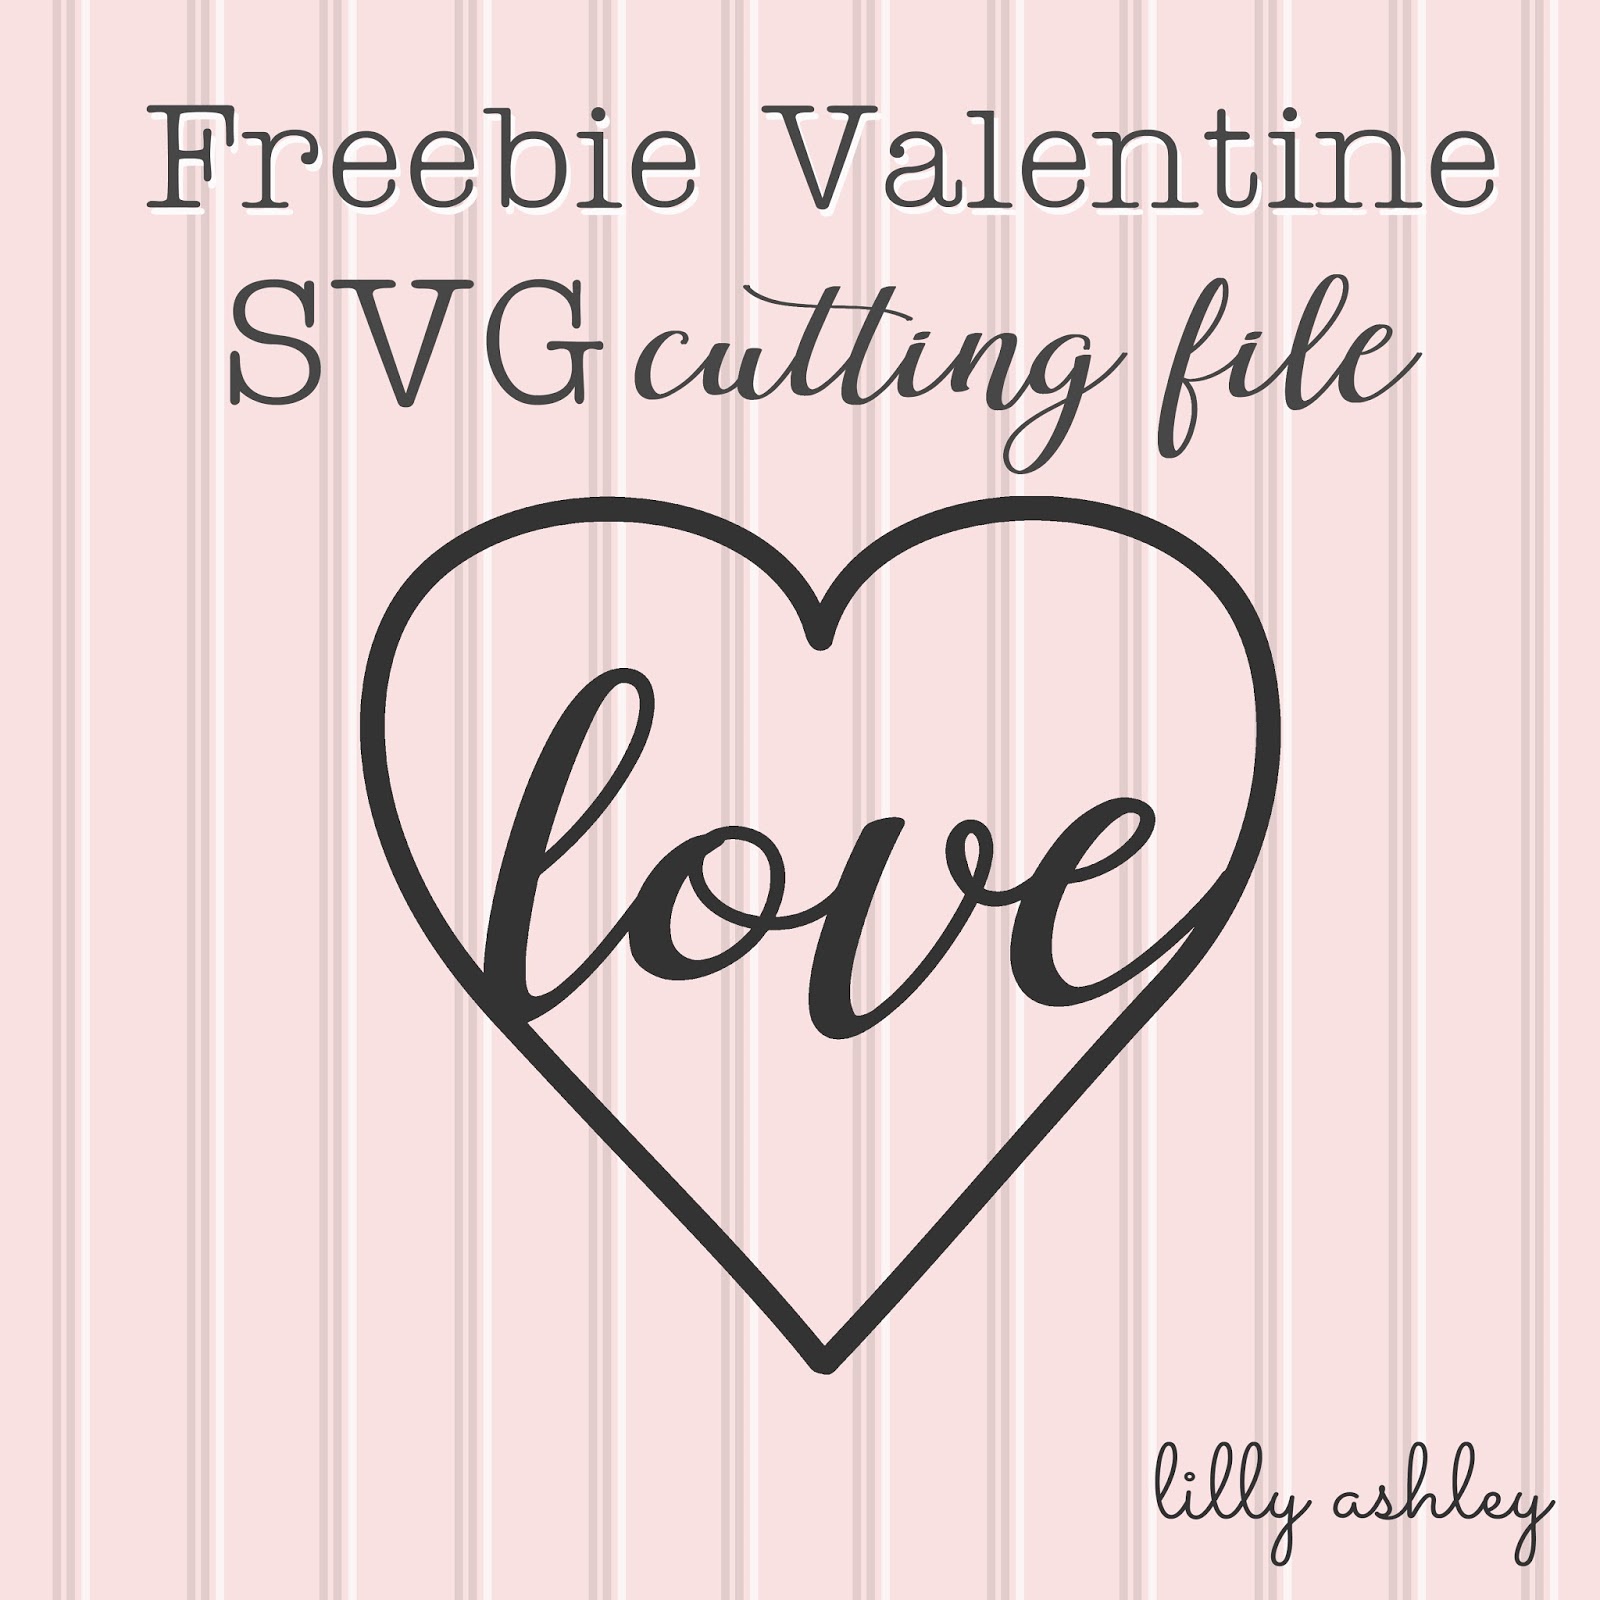 Lilly Ashley: Free Valentine SVG File